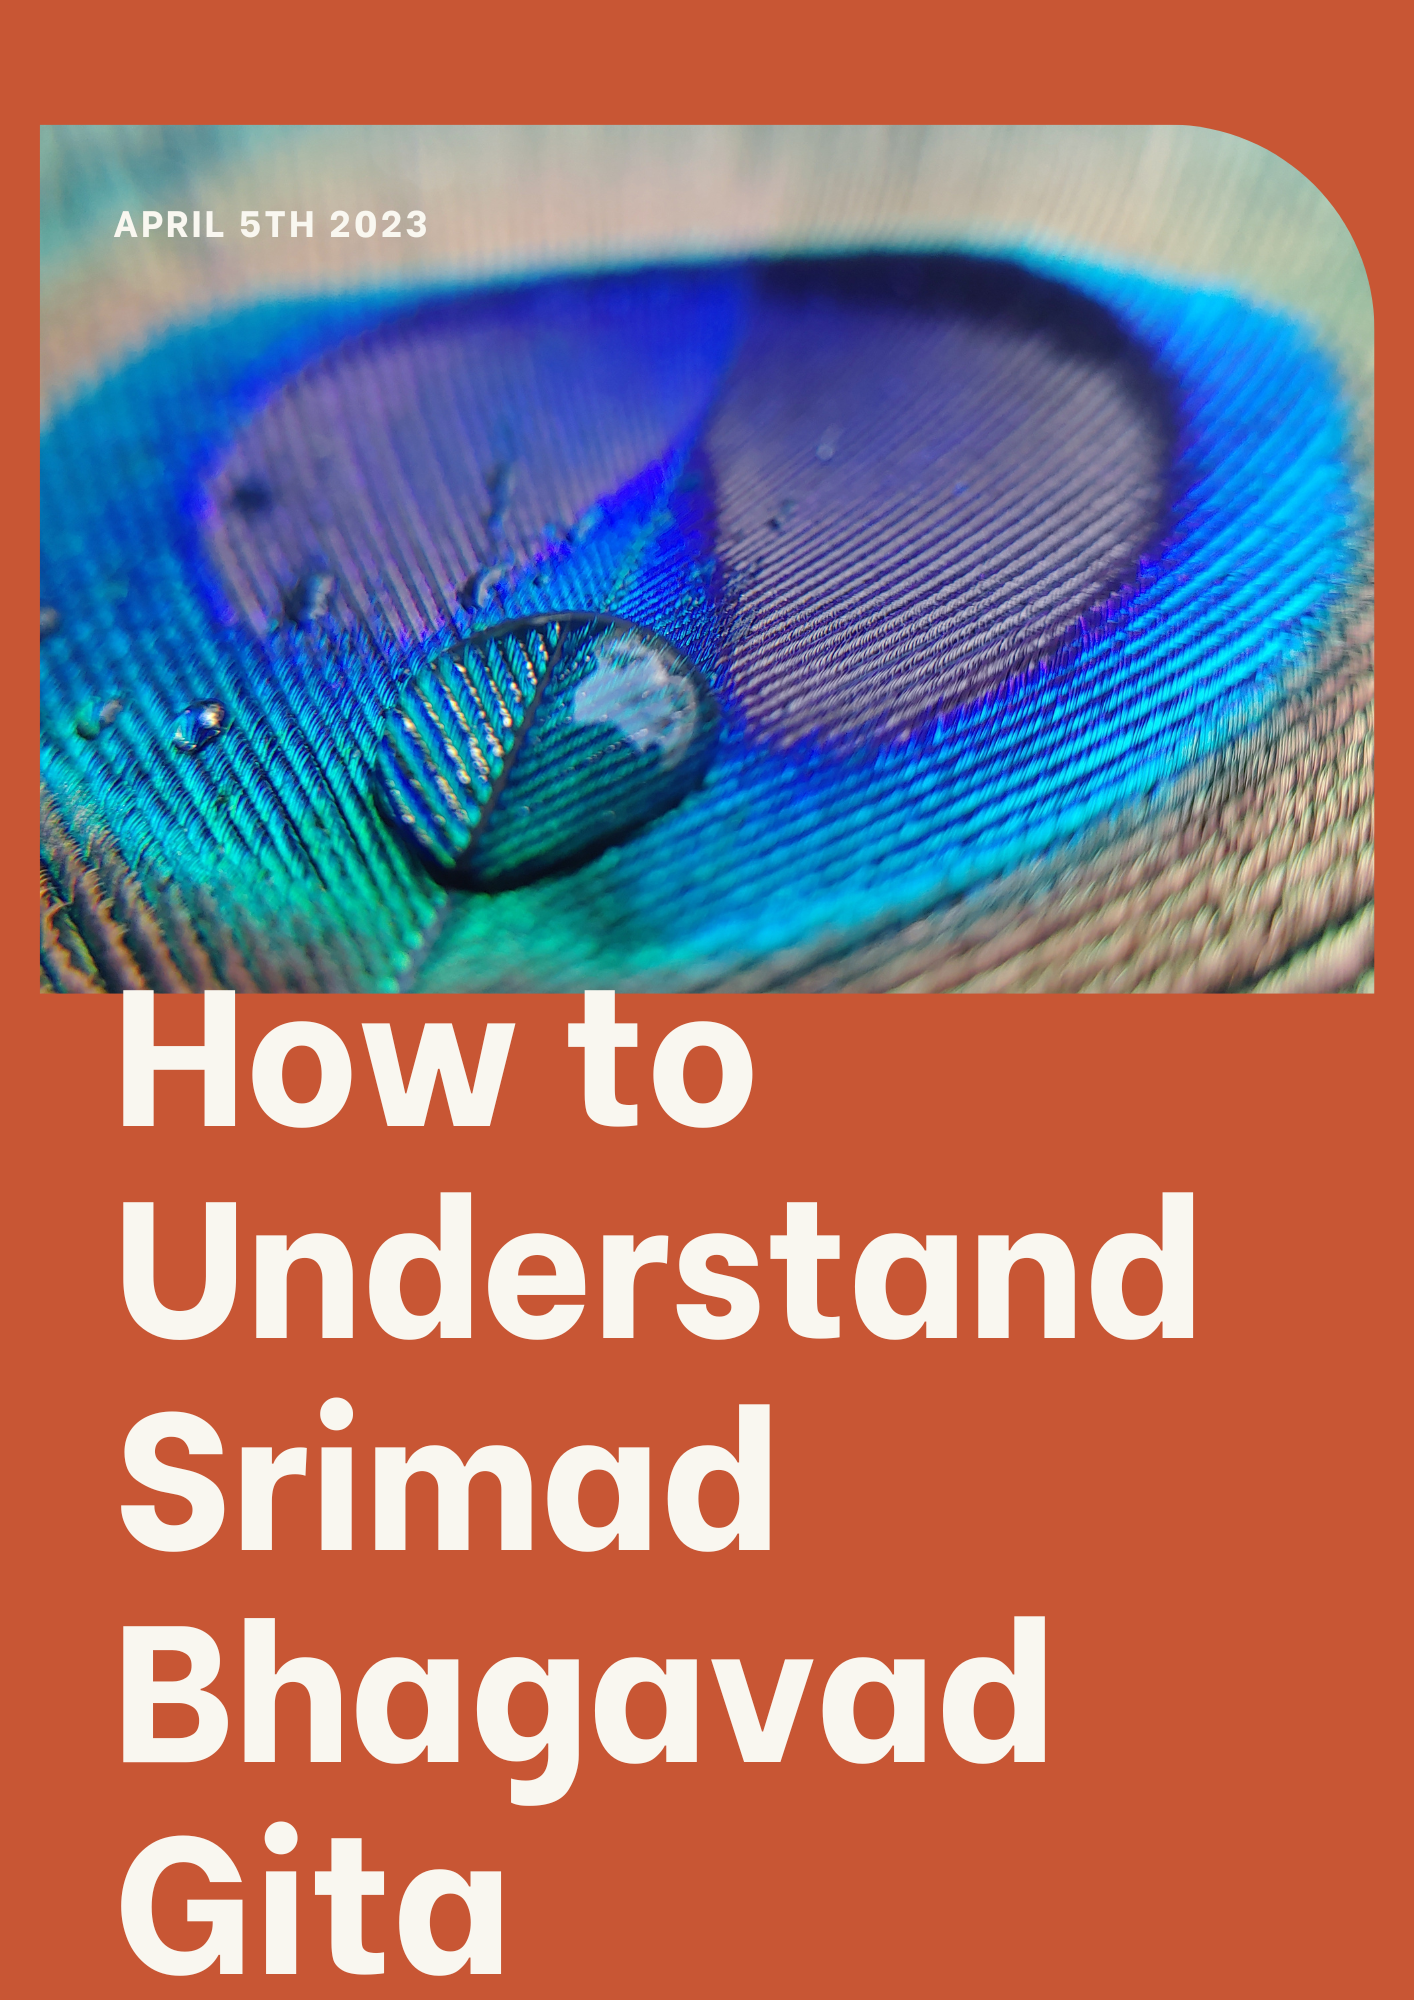 How to understand Srimad Bhagavad Gita